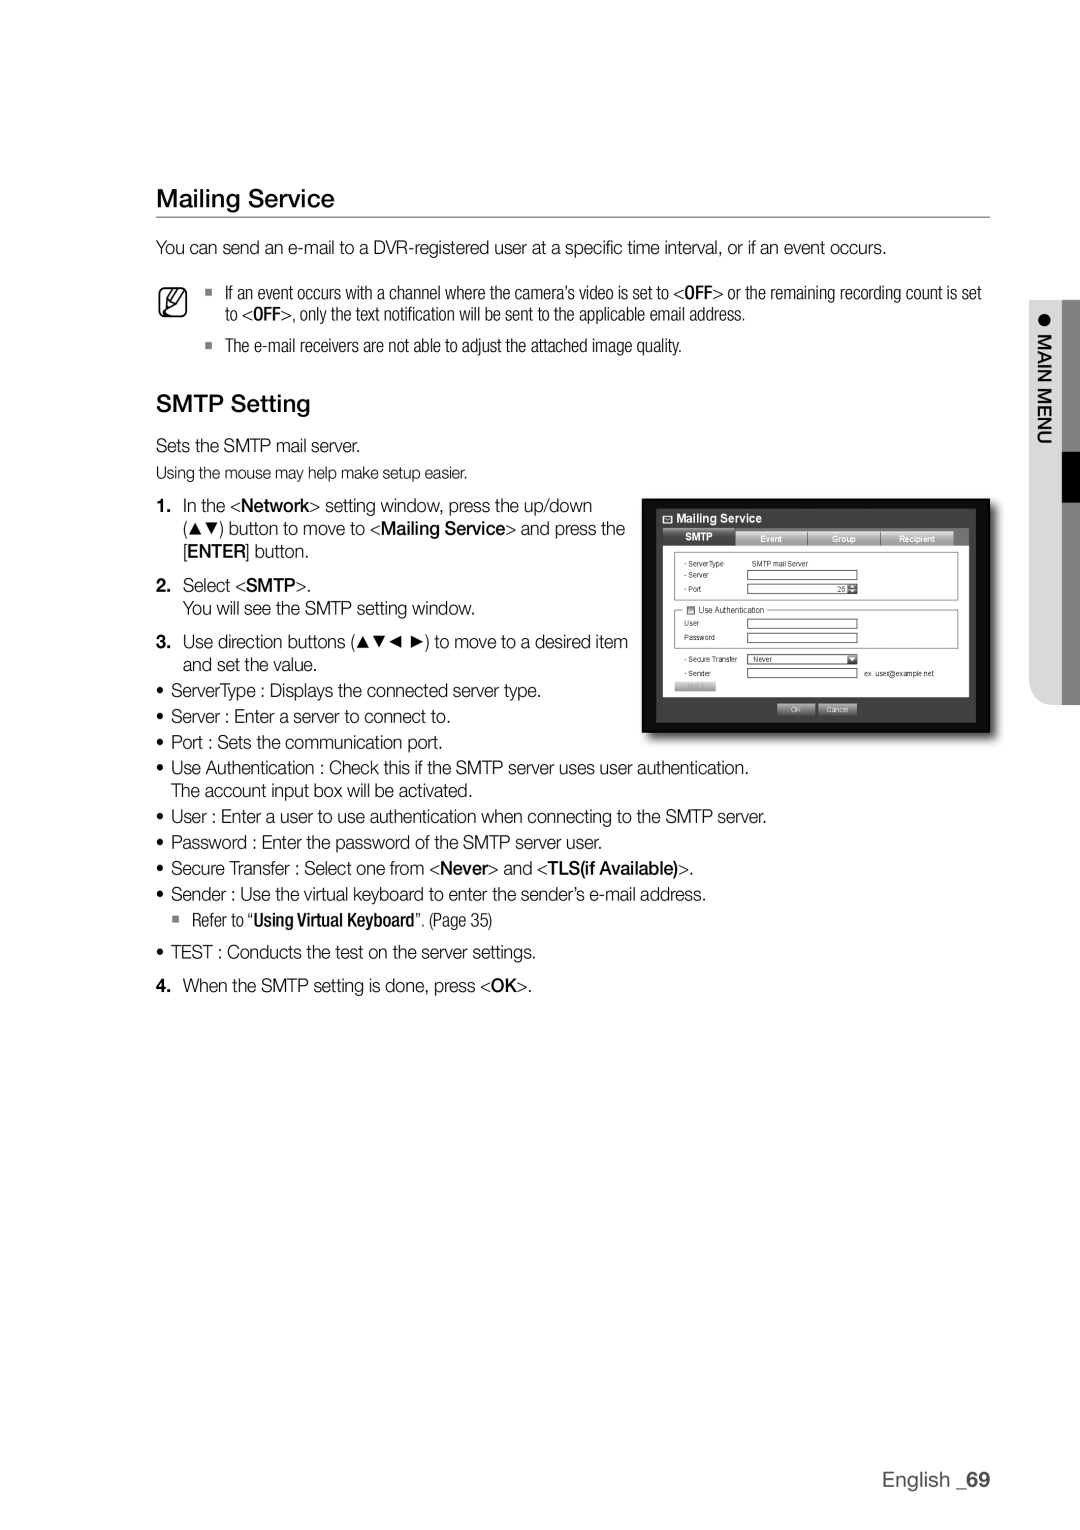 Samsung SDR3100 user manual mailing Service, SmTP Setting, English 